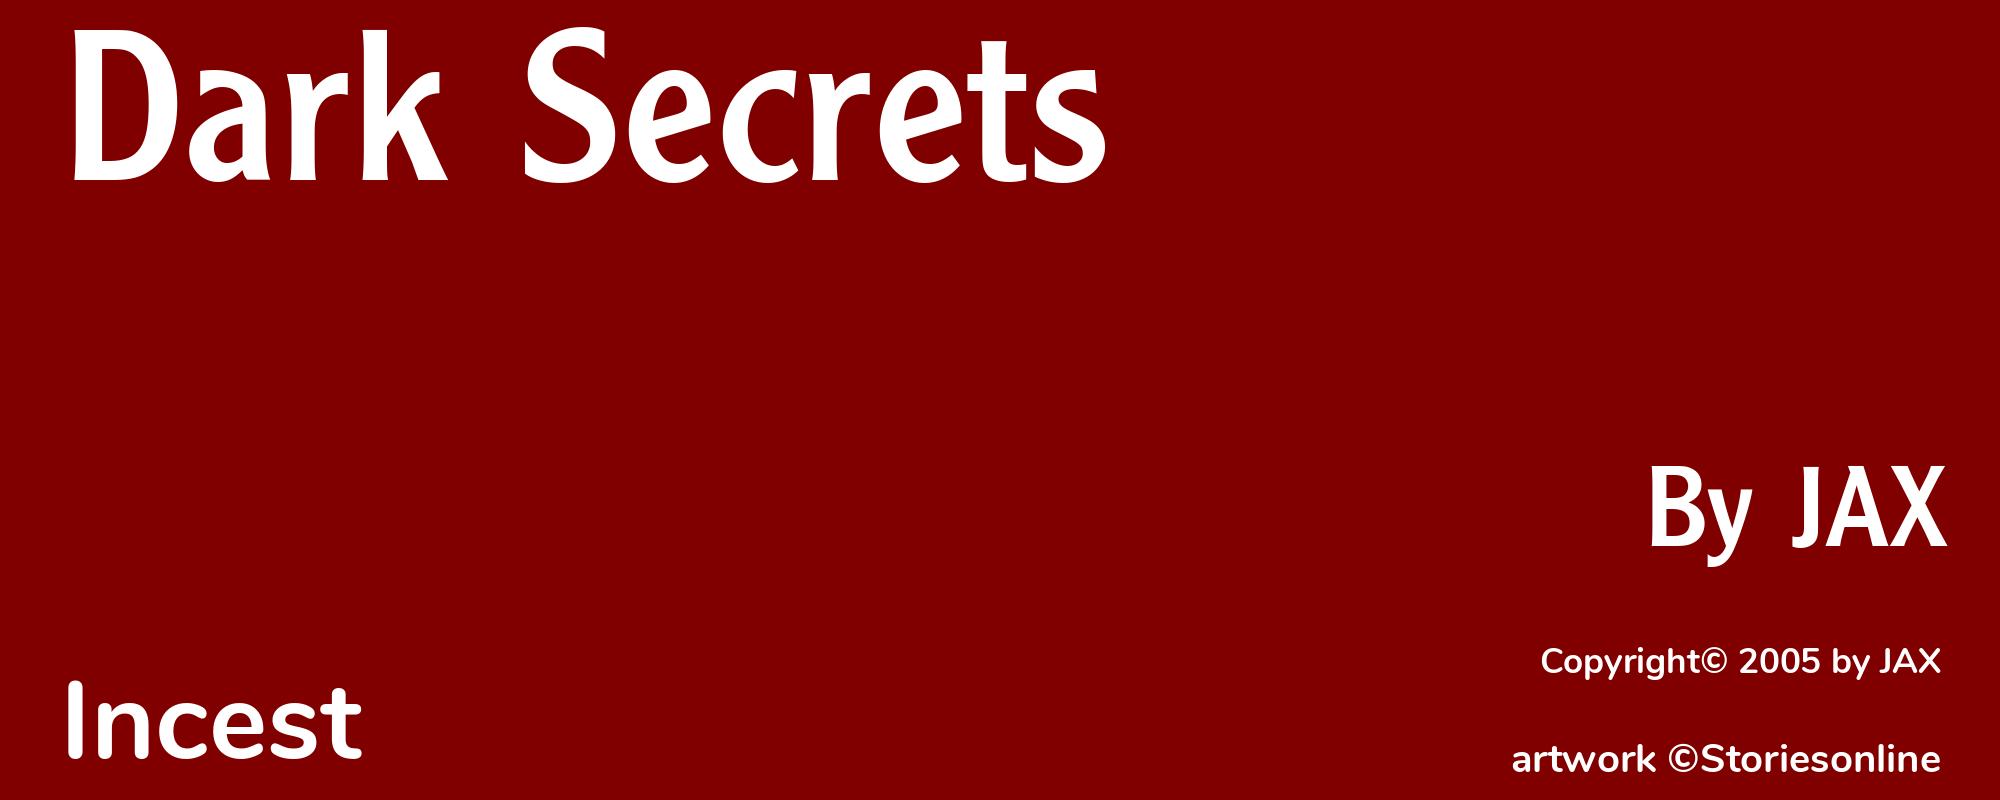 Dark Secrets - Cover